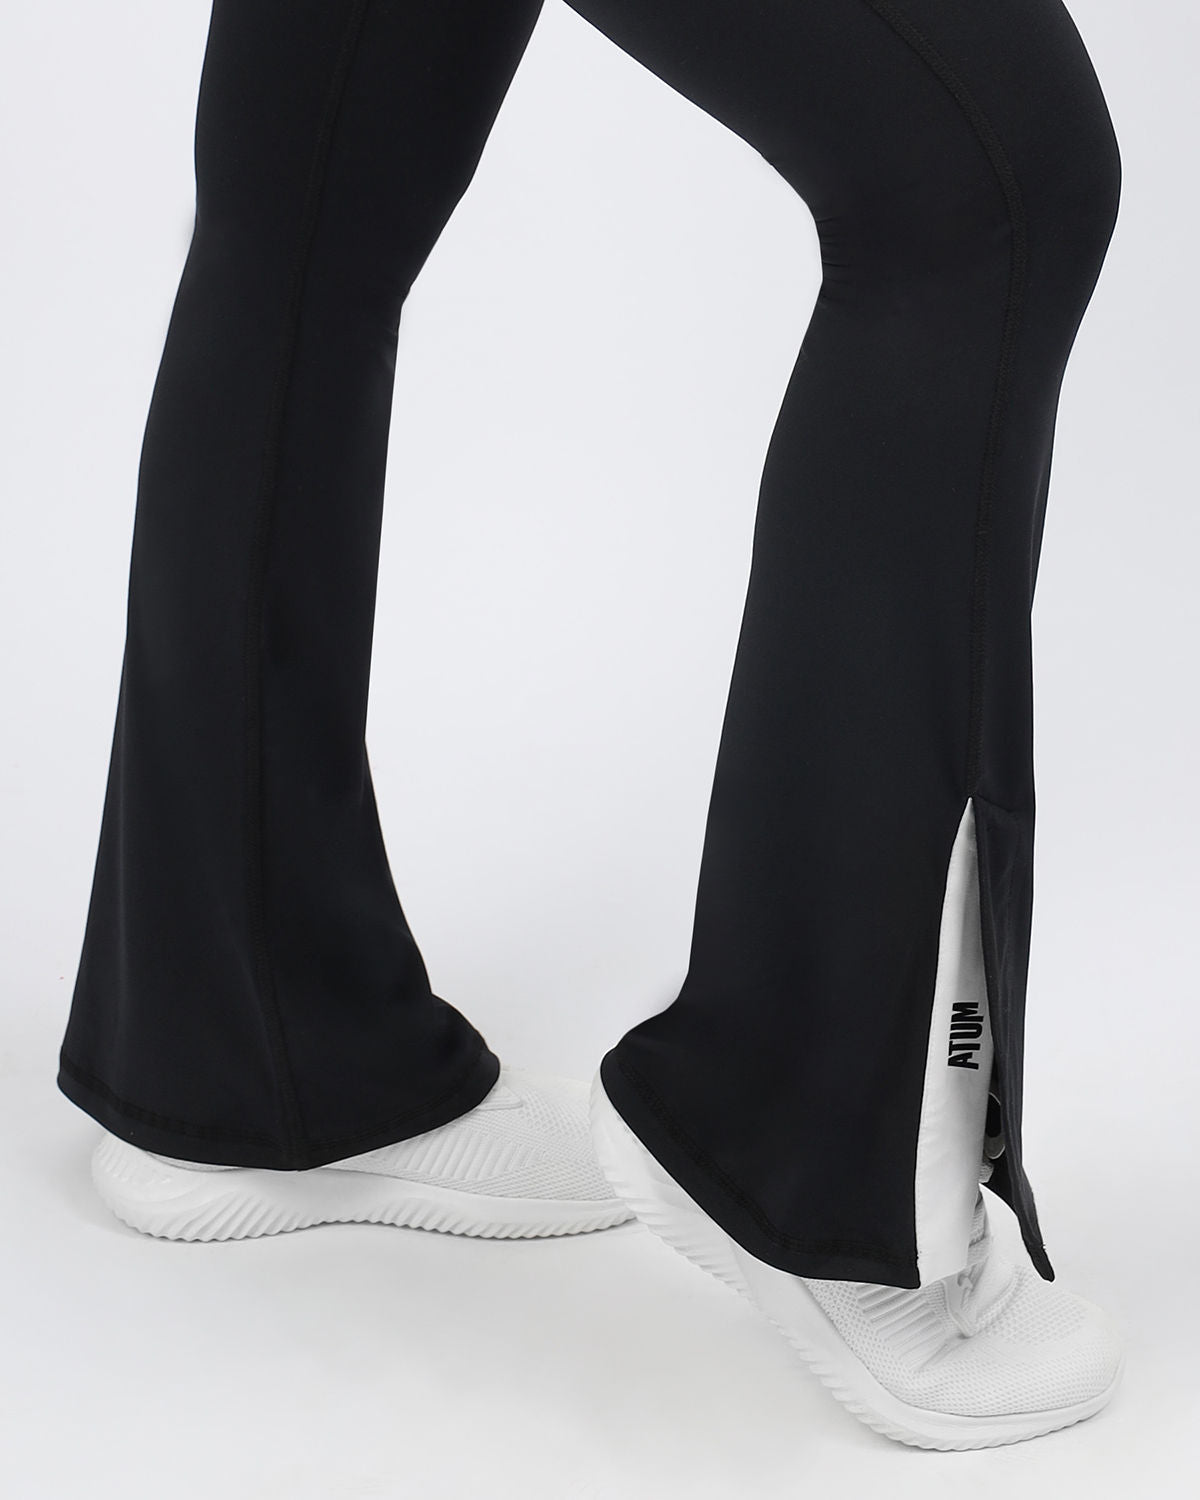 Atum Women's Slit Yoga Pants